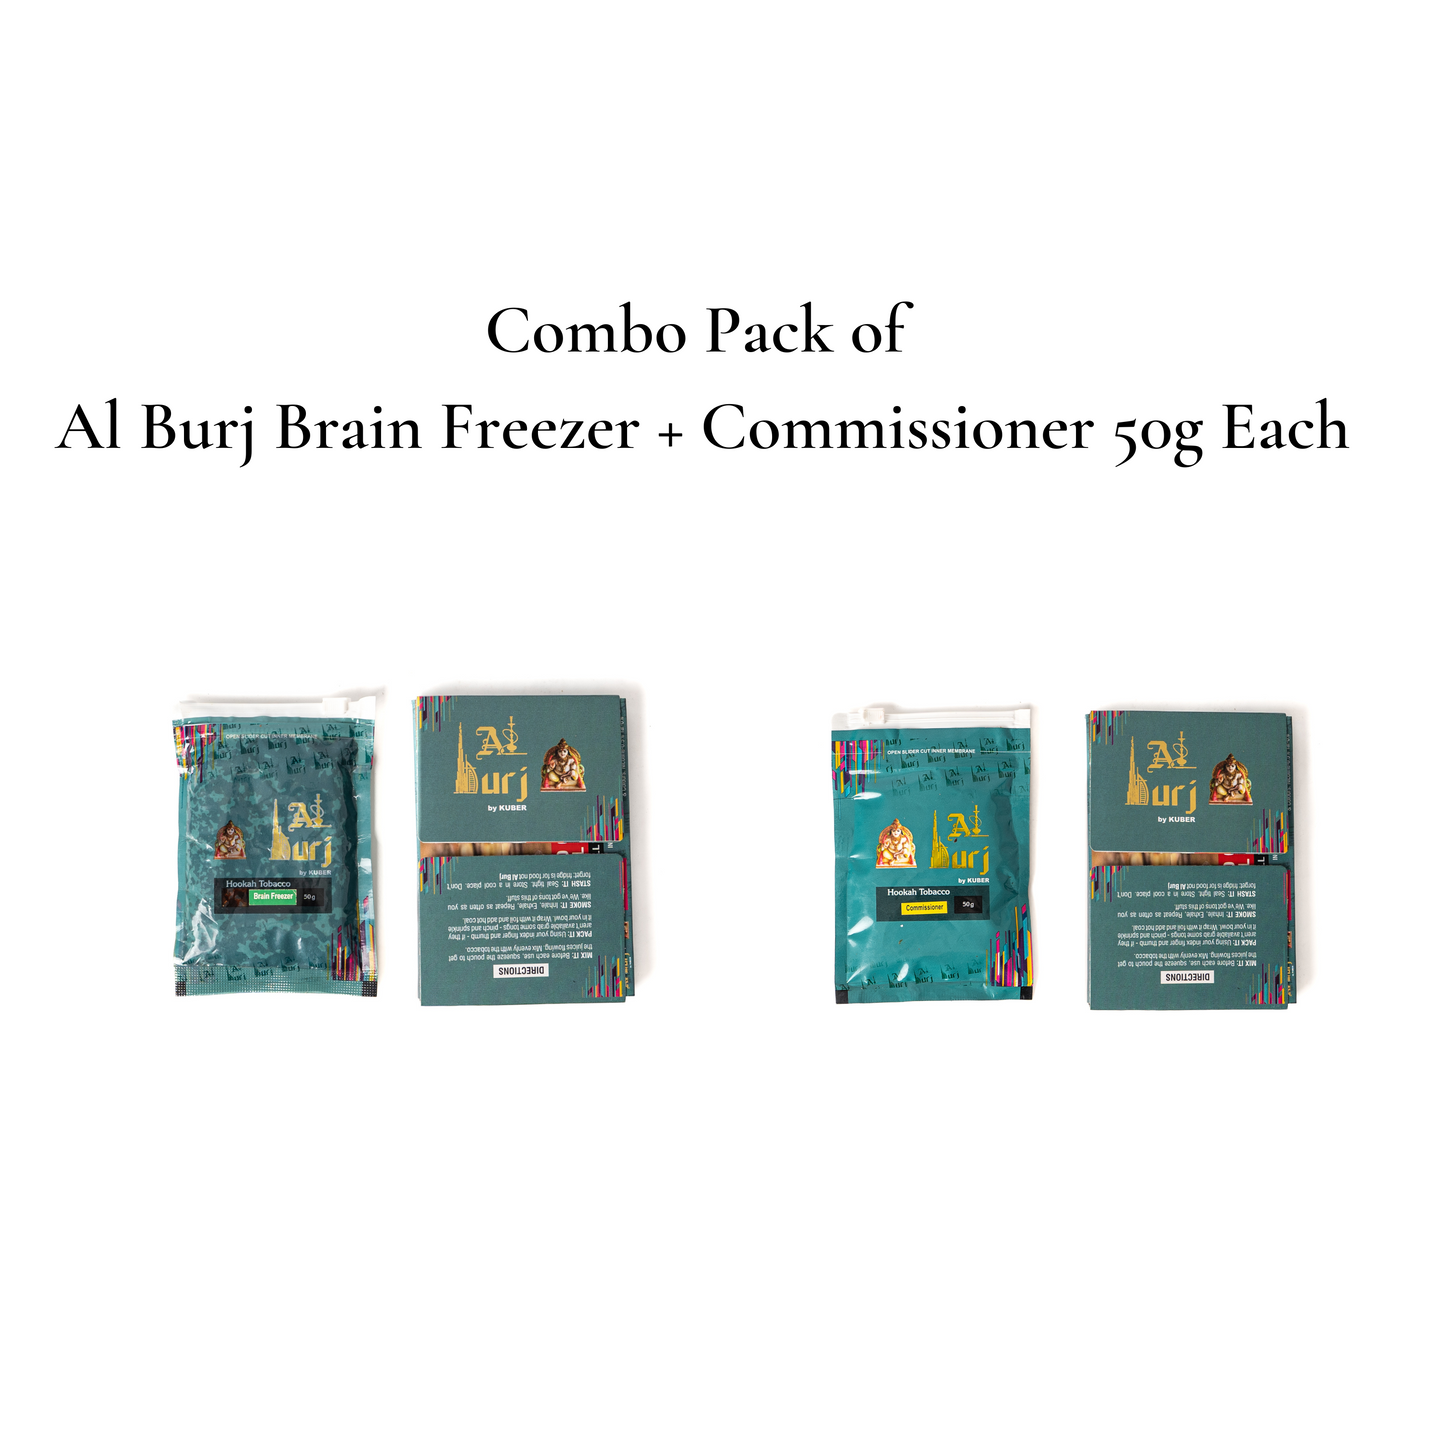 Al Burj Brain Freezer + Commissioner Flavor 50g Each (Pack of 2)